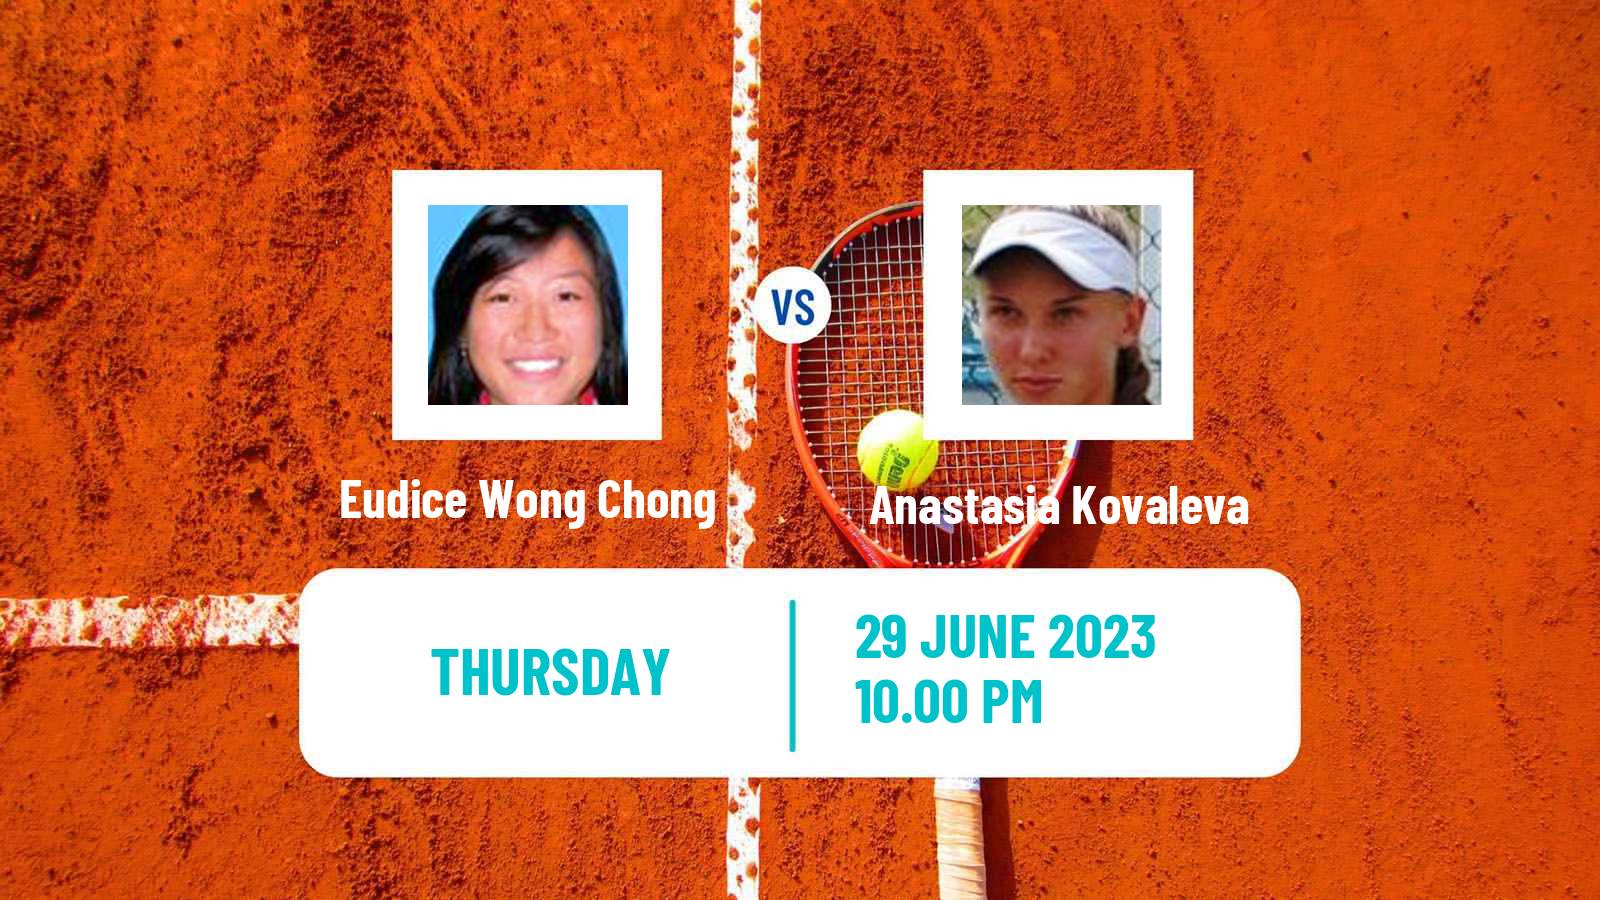 Tennis ITF W25 Hong Kong Women Eudice Wong Chong - Anastasia Kovaleva